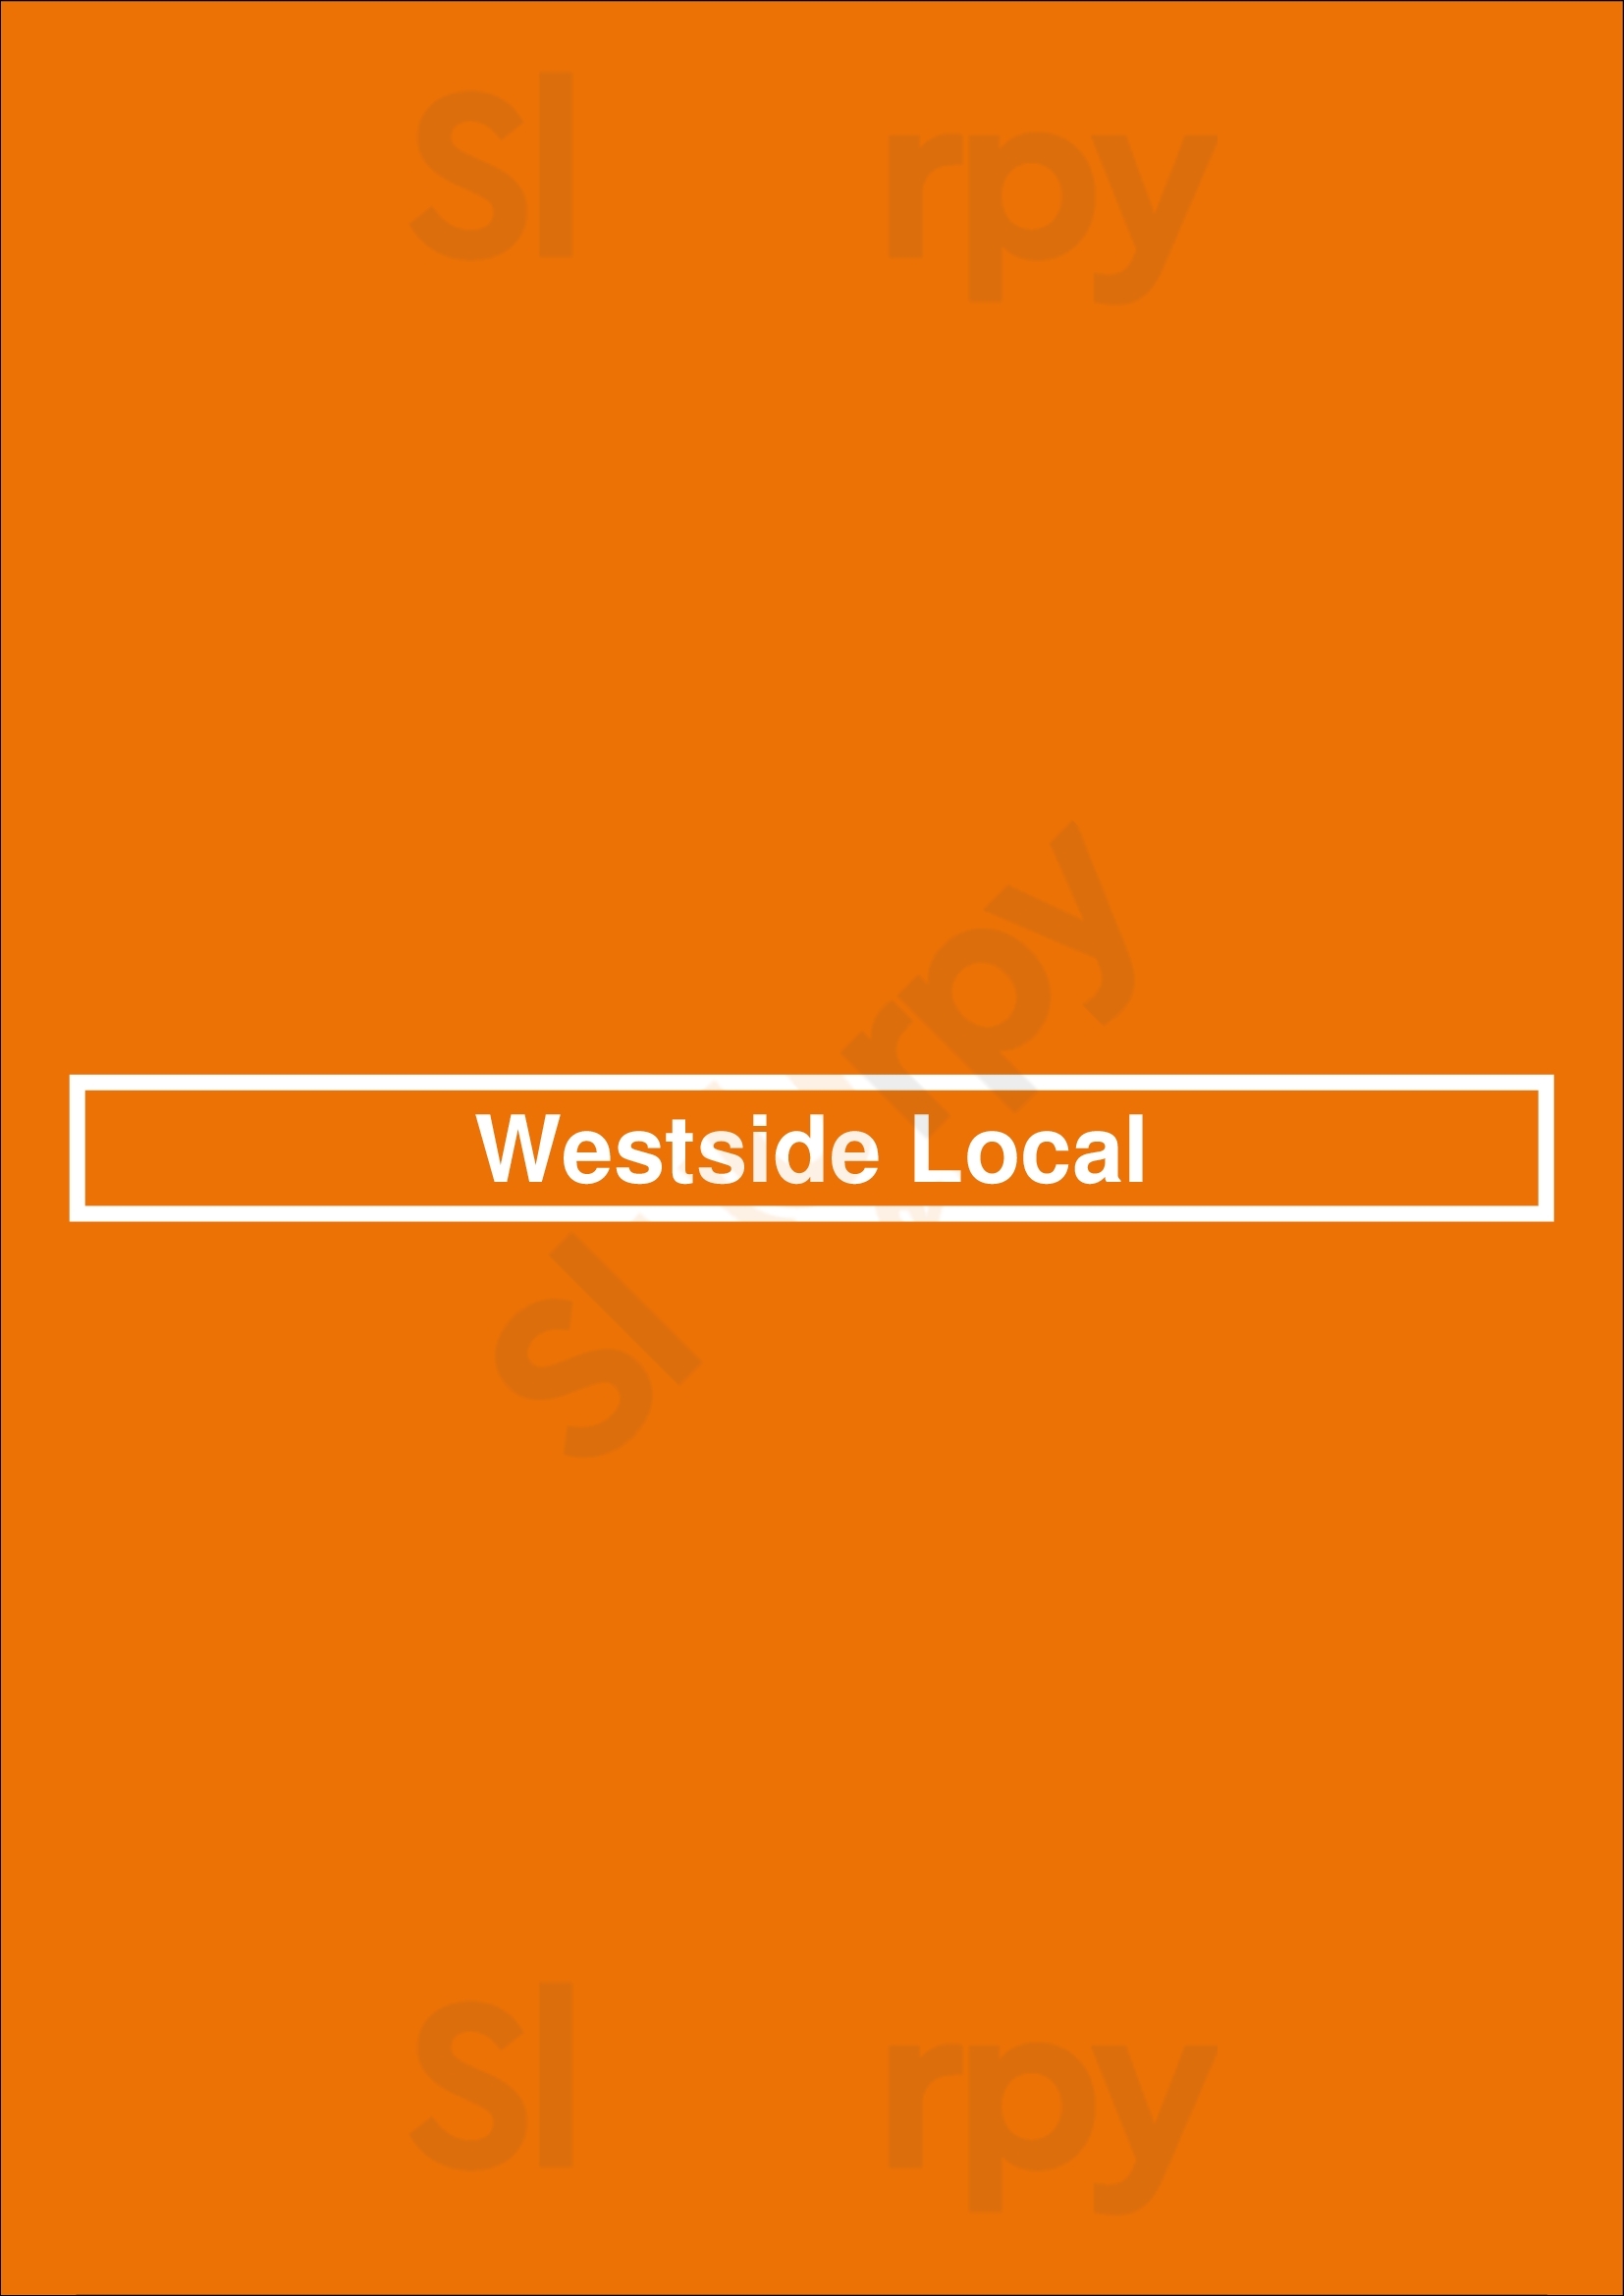 The Westside Local Kansas City Menu - 1